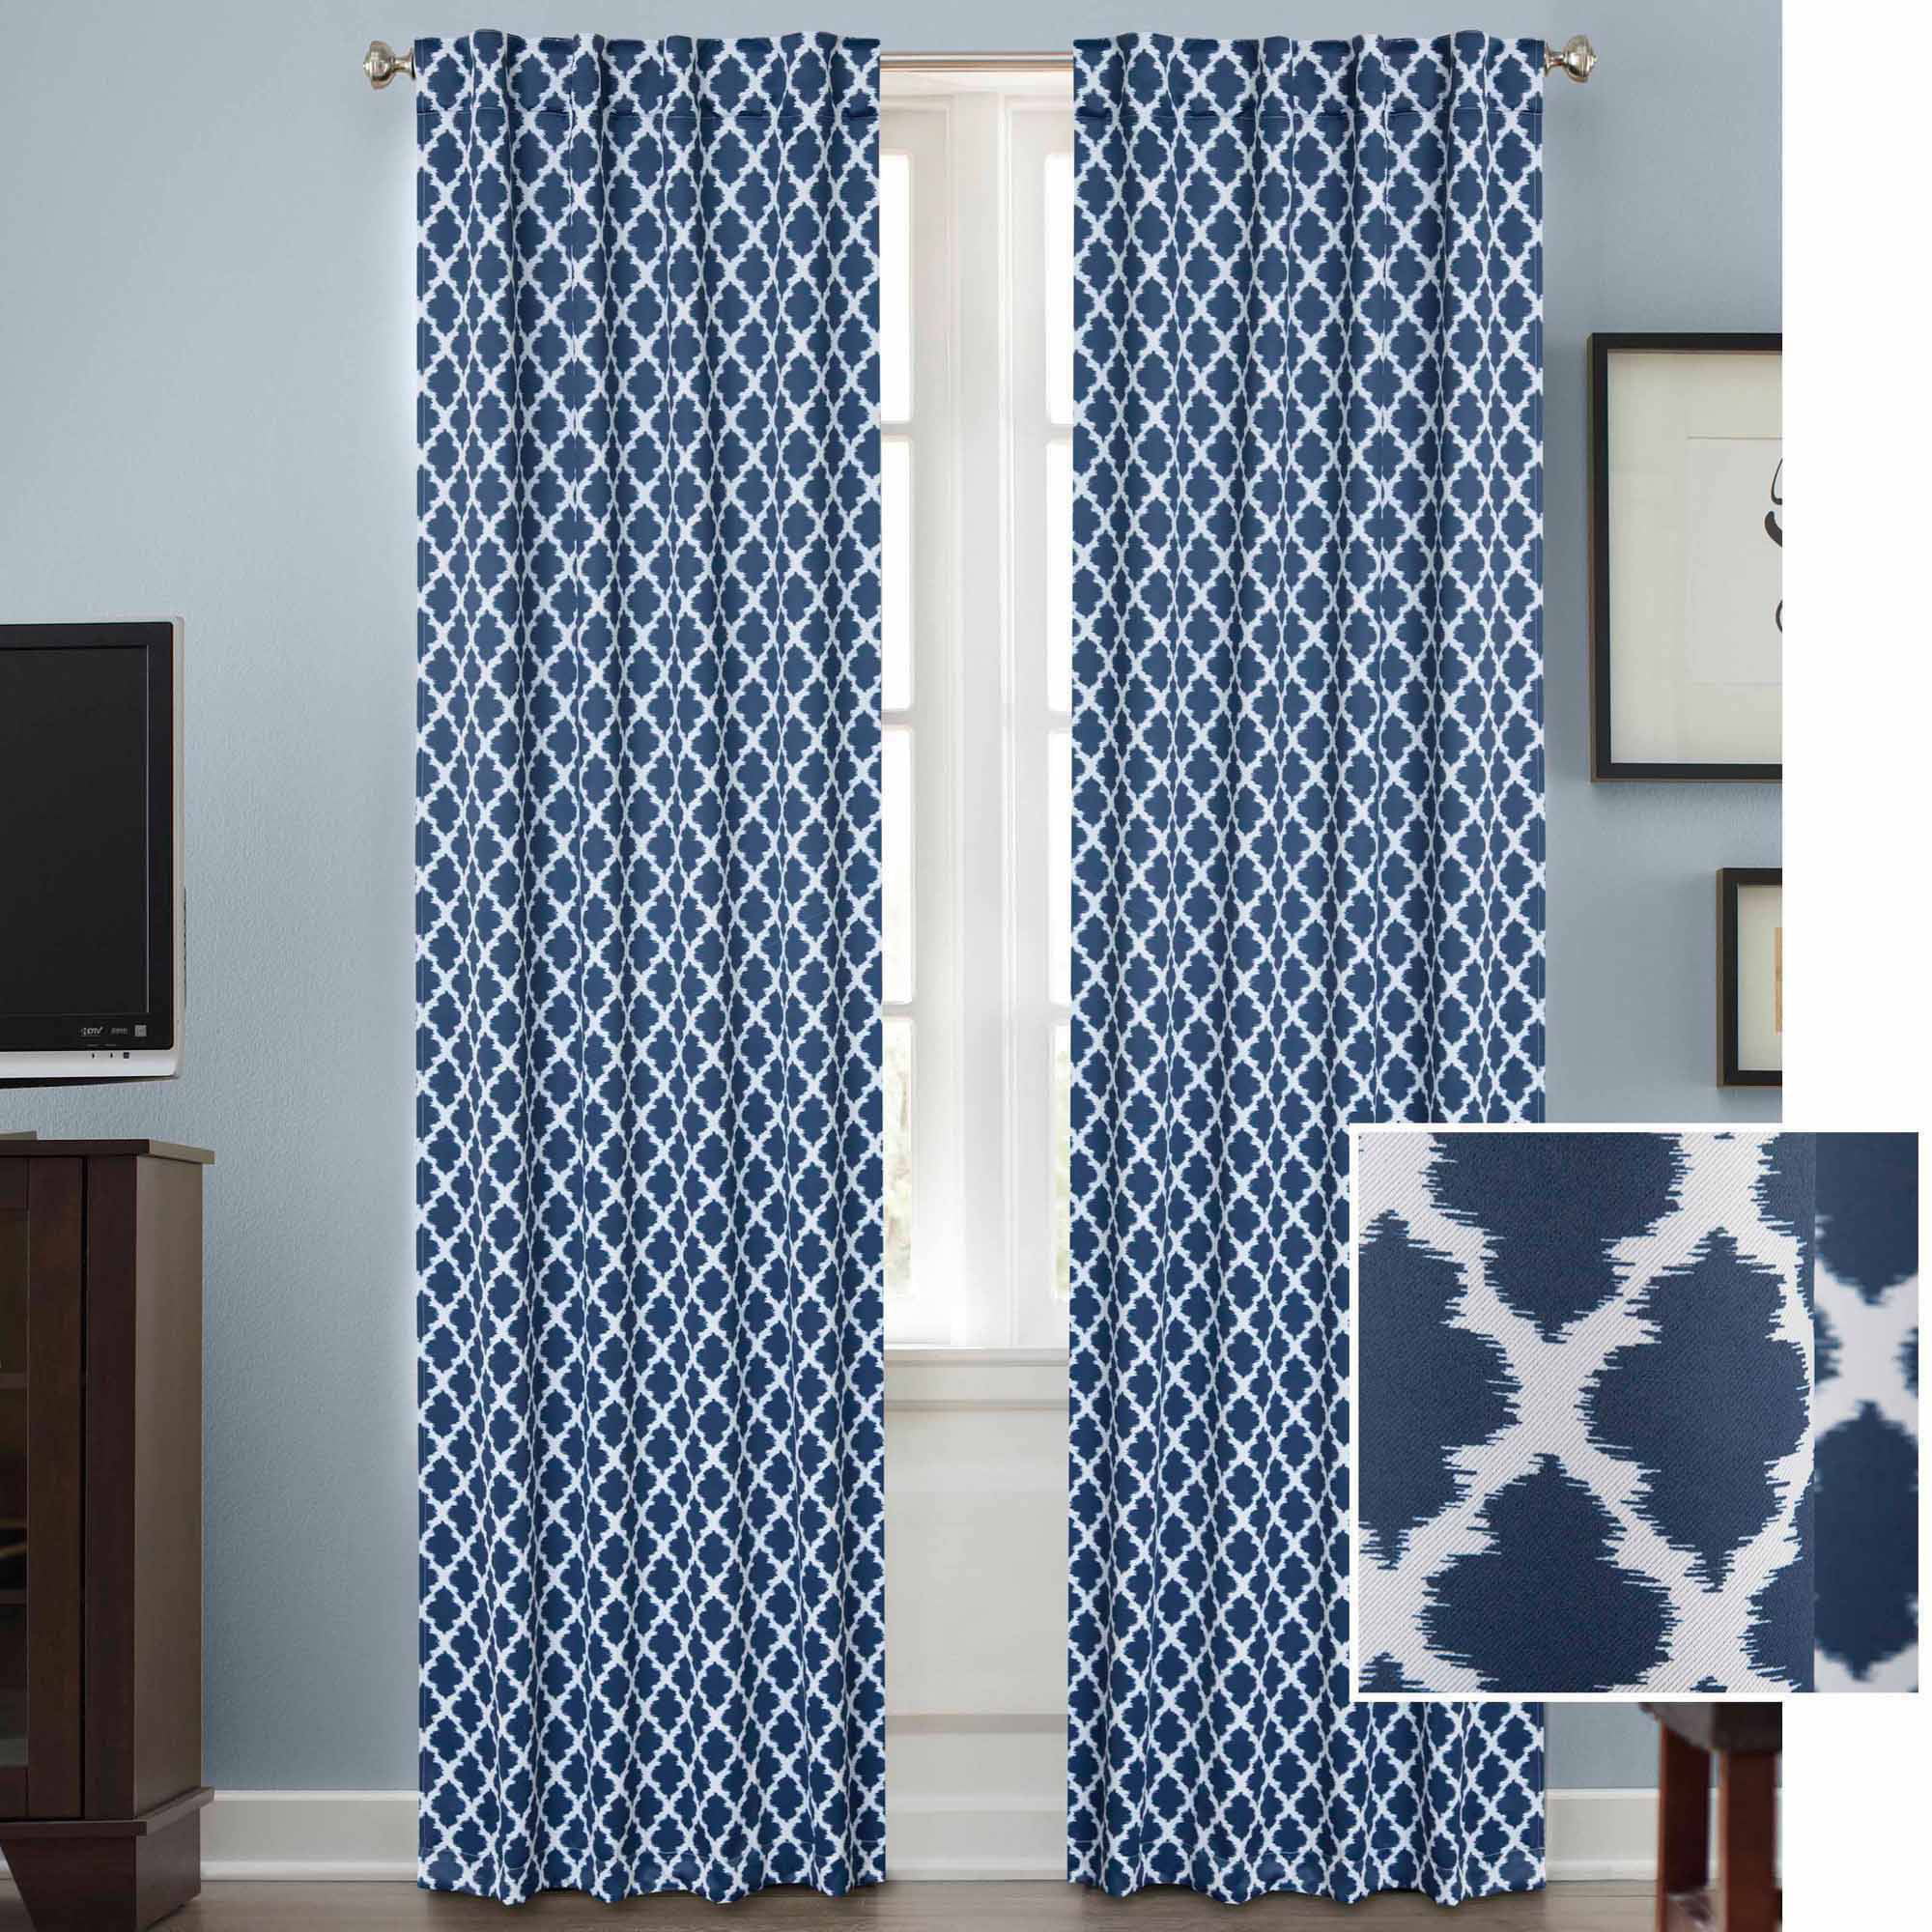 blue curtain fabric texture